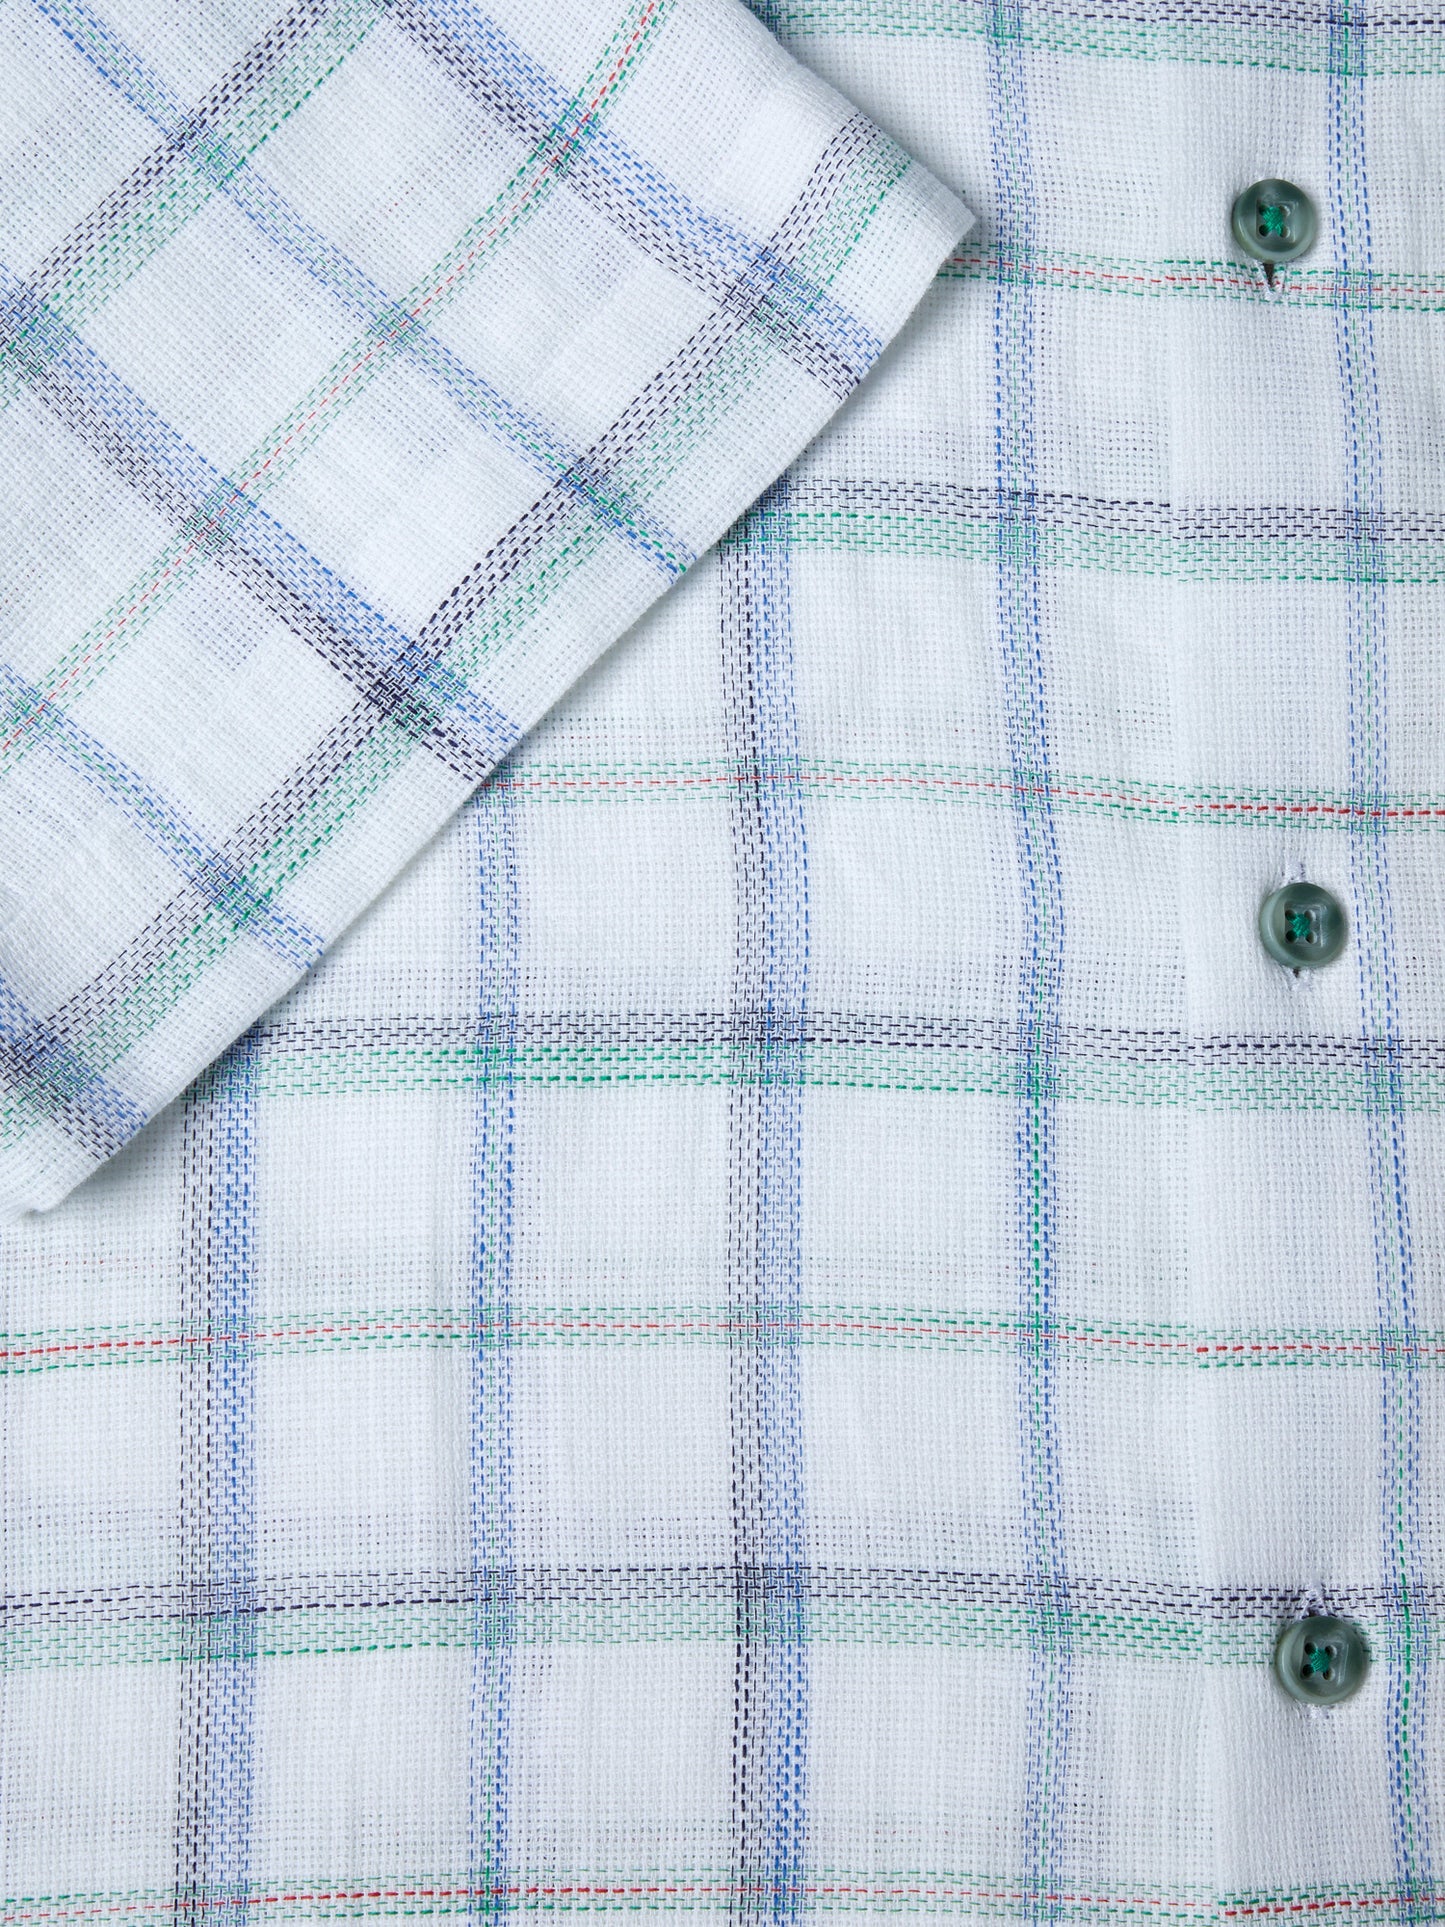 Pure-Cotton Short-Sleeve Shirt - White Check